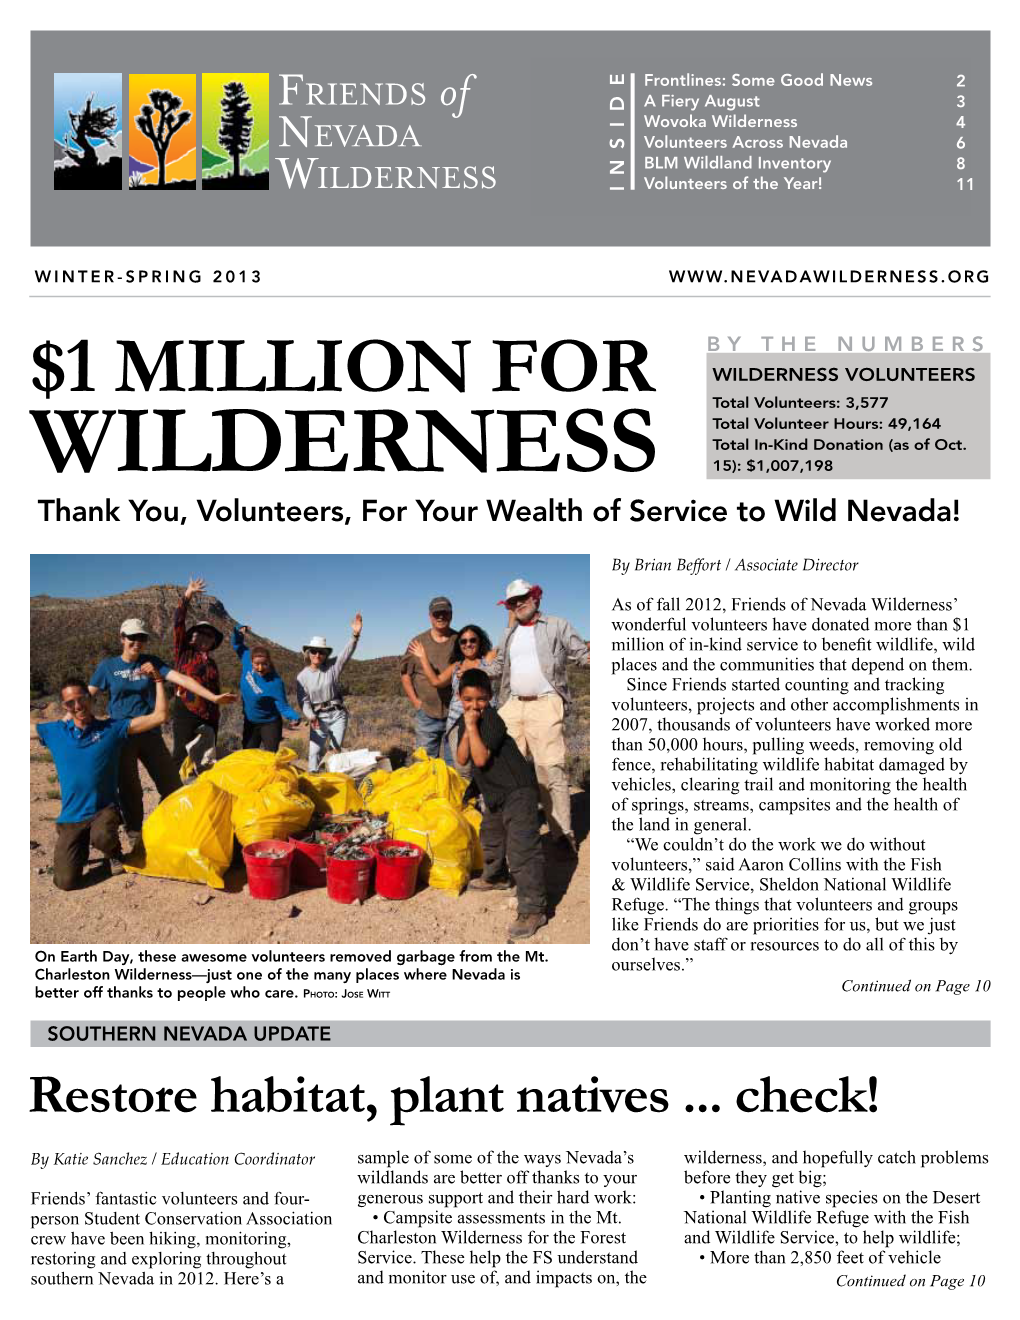 Wovoka Wilderness 4 Nevada Volunteers Across Nevada 6 BLM Wildland Inventory 8